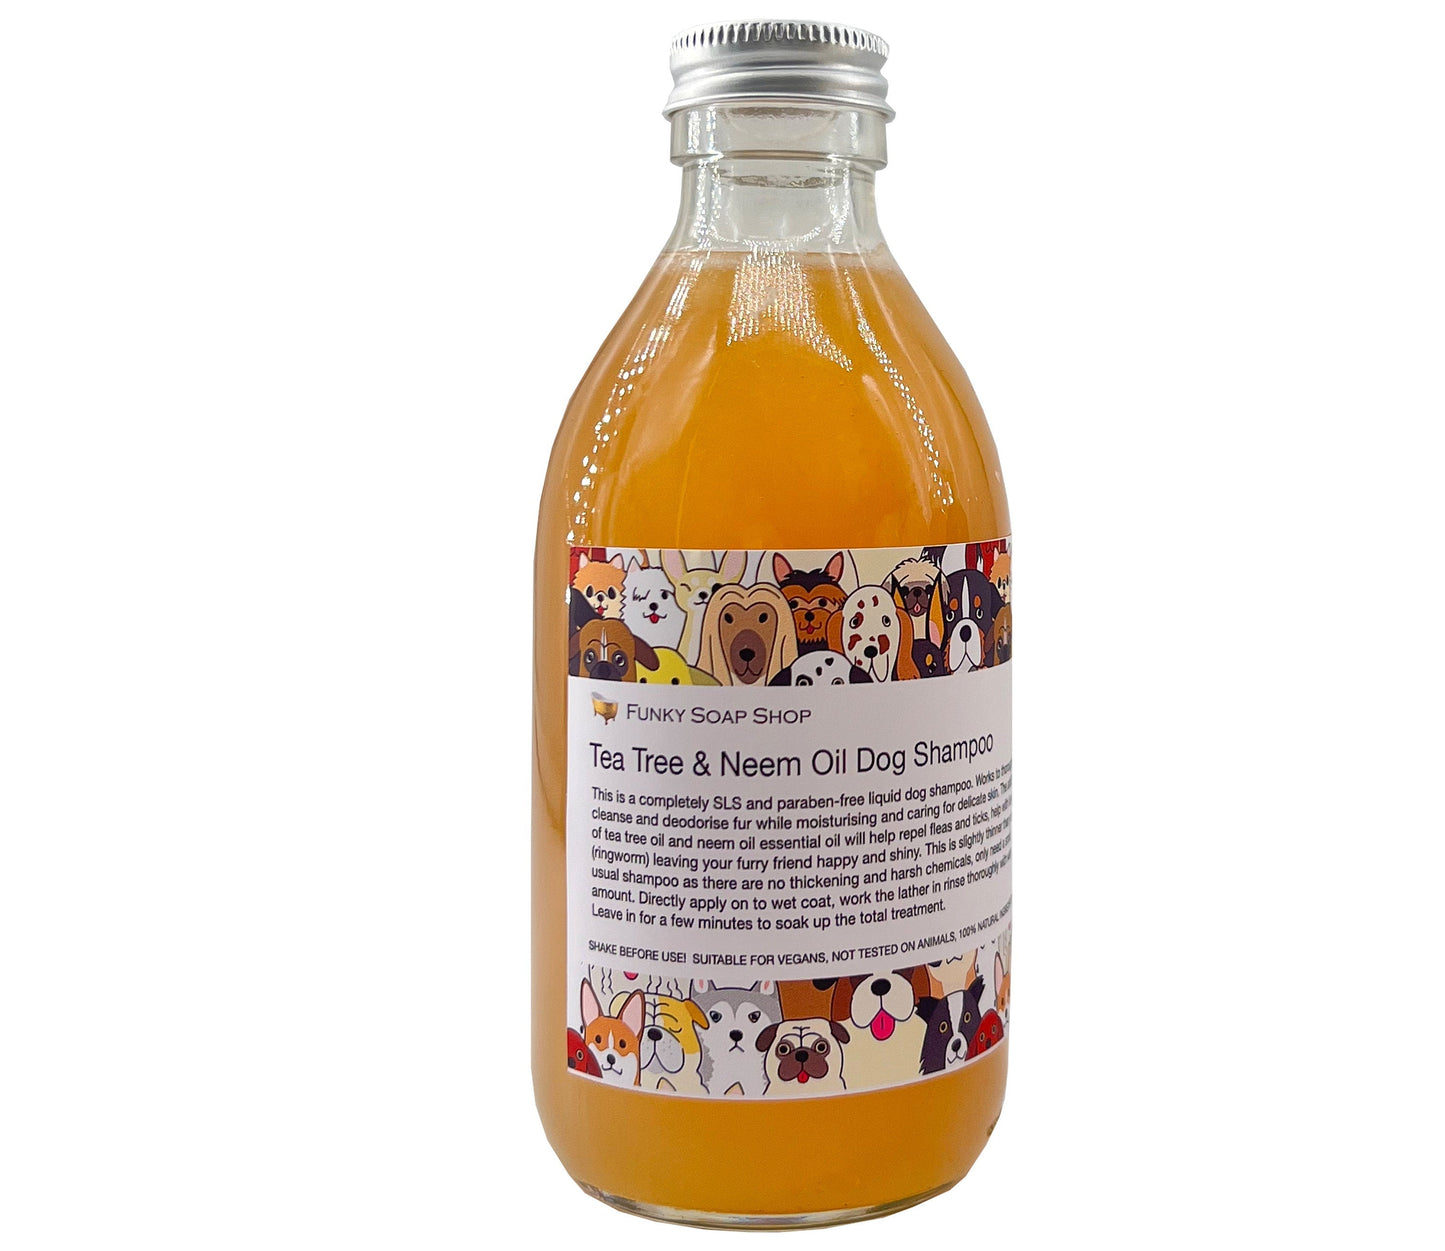 Tea Tree & Neem Oil Liquid Dog Shampoo, Glass Bottle - Funky Soap Shop